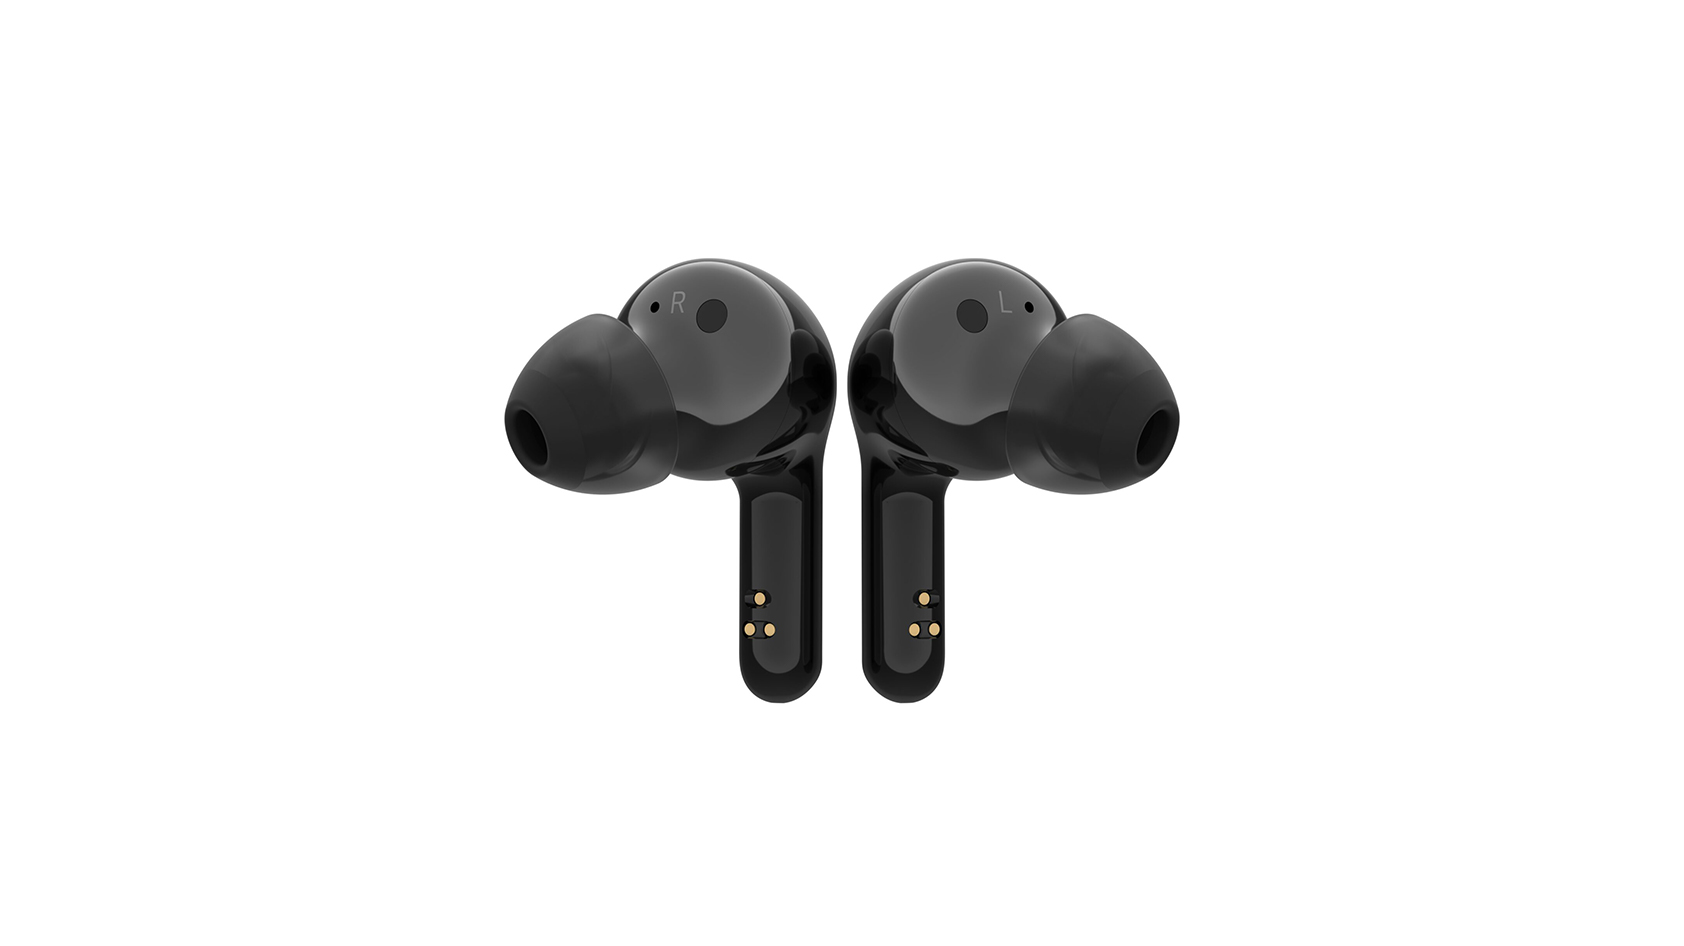 LG TONE Free FN7 true wireless earbuds product render